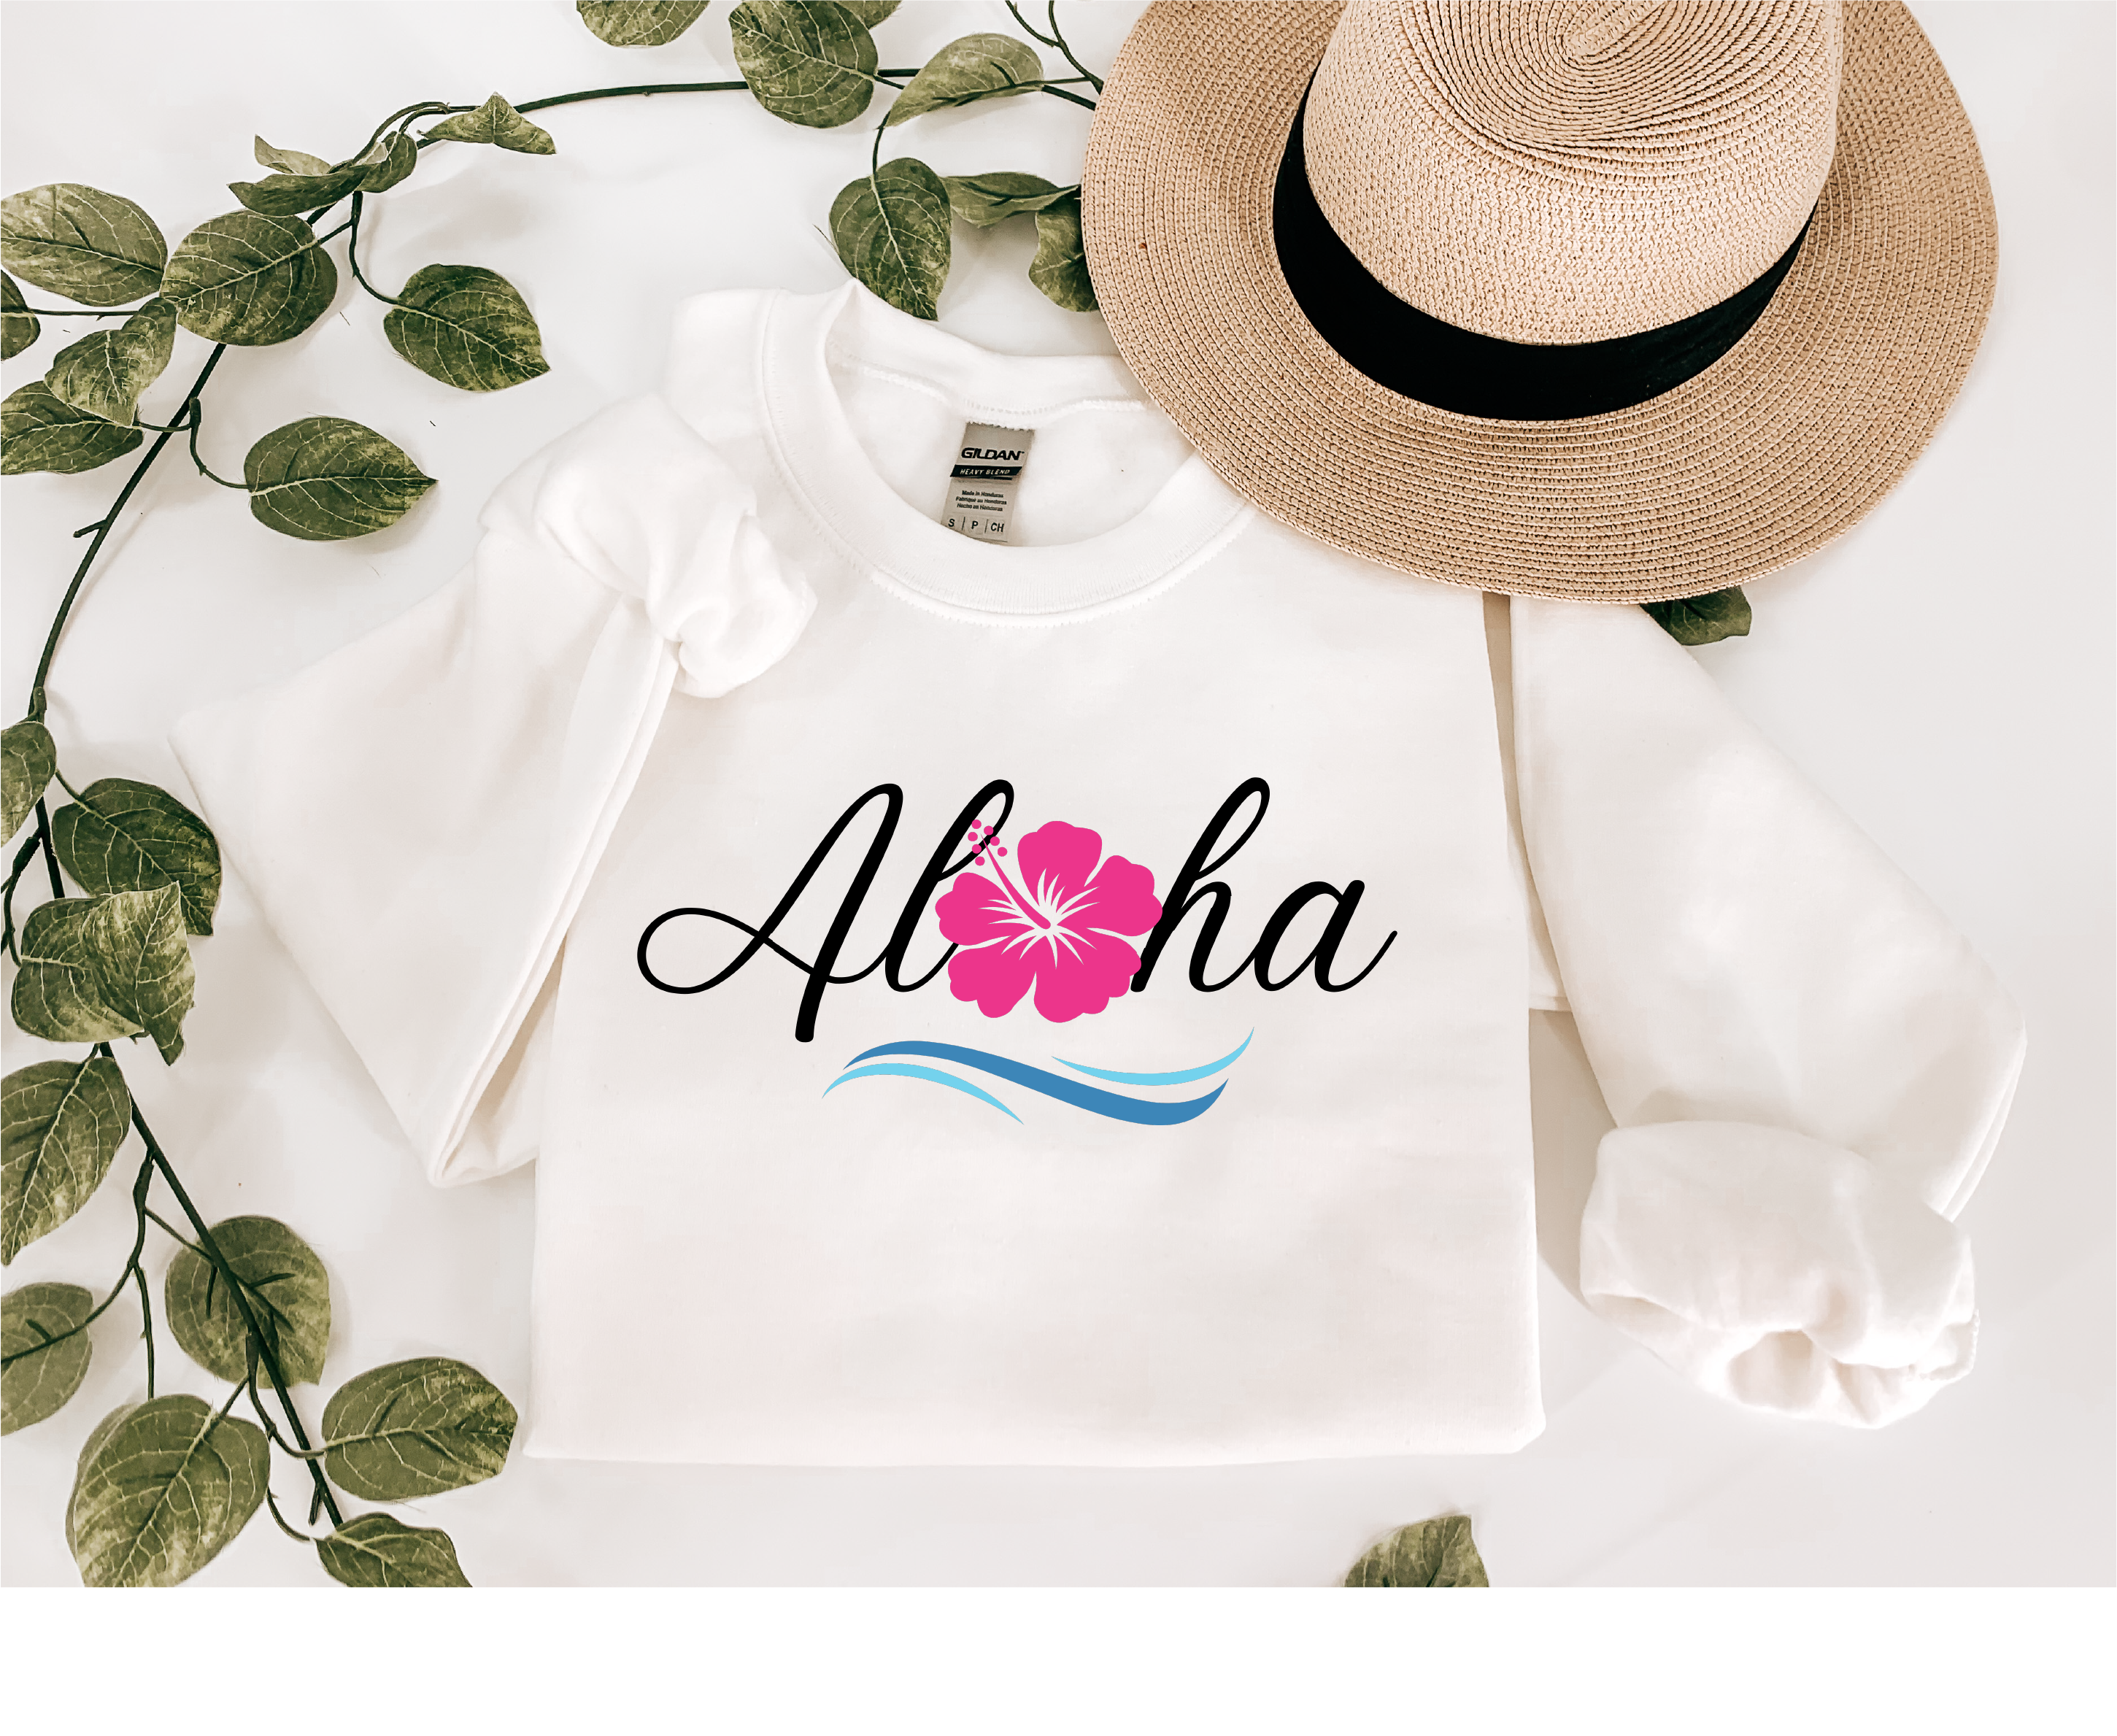 Aloha Apparel – Made By Icing